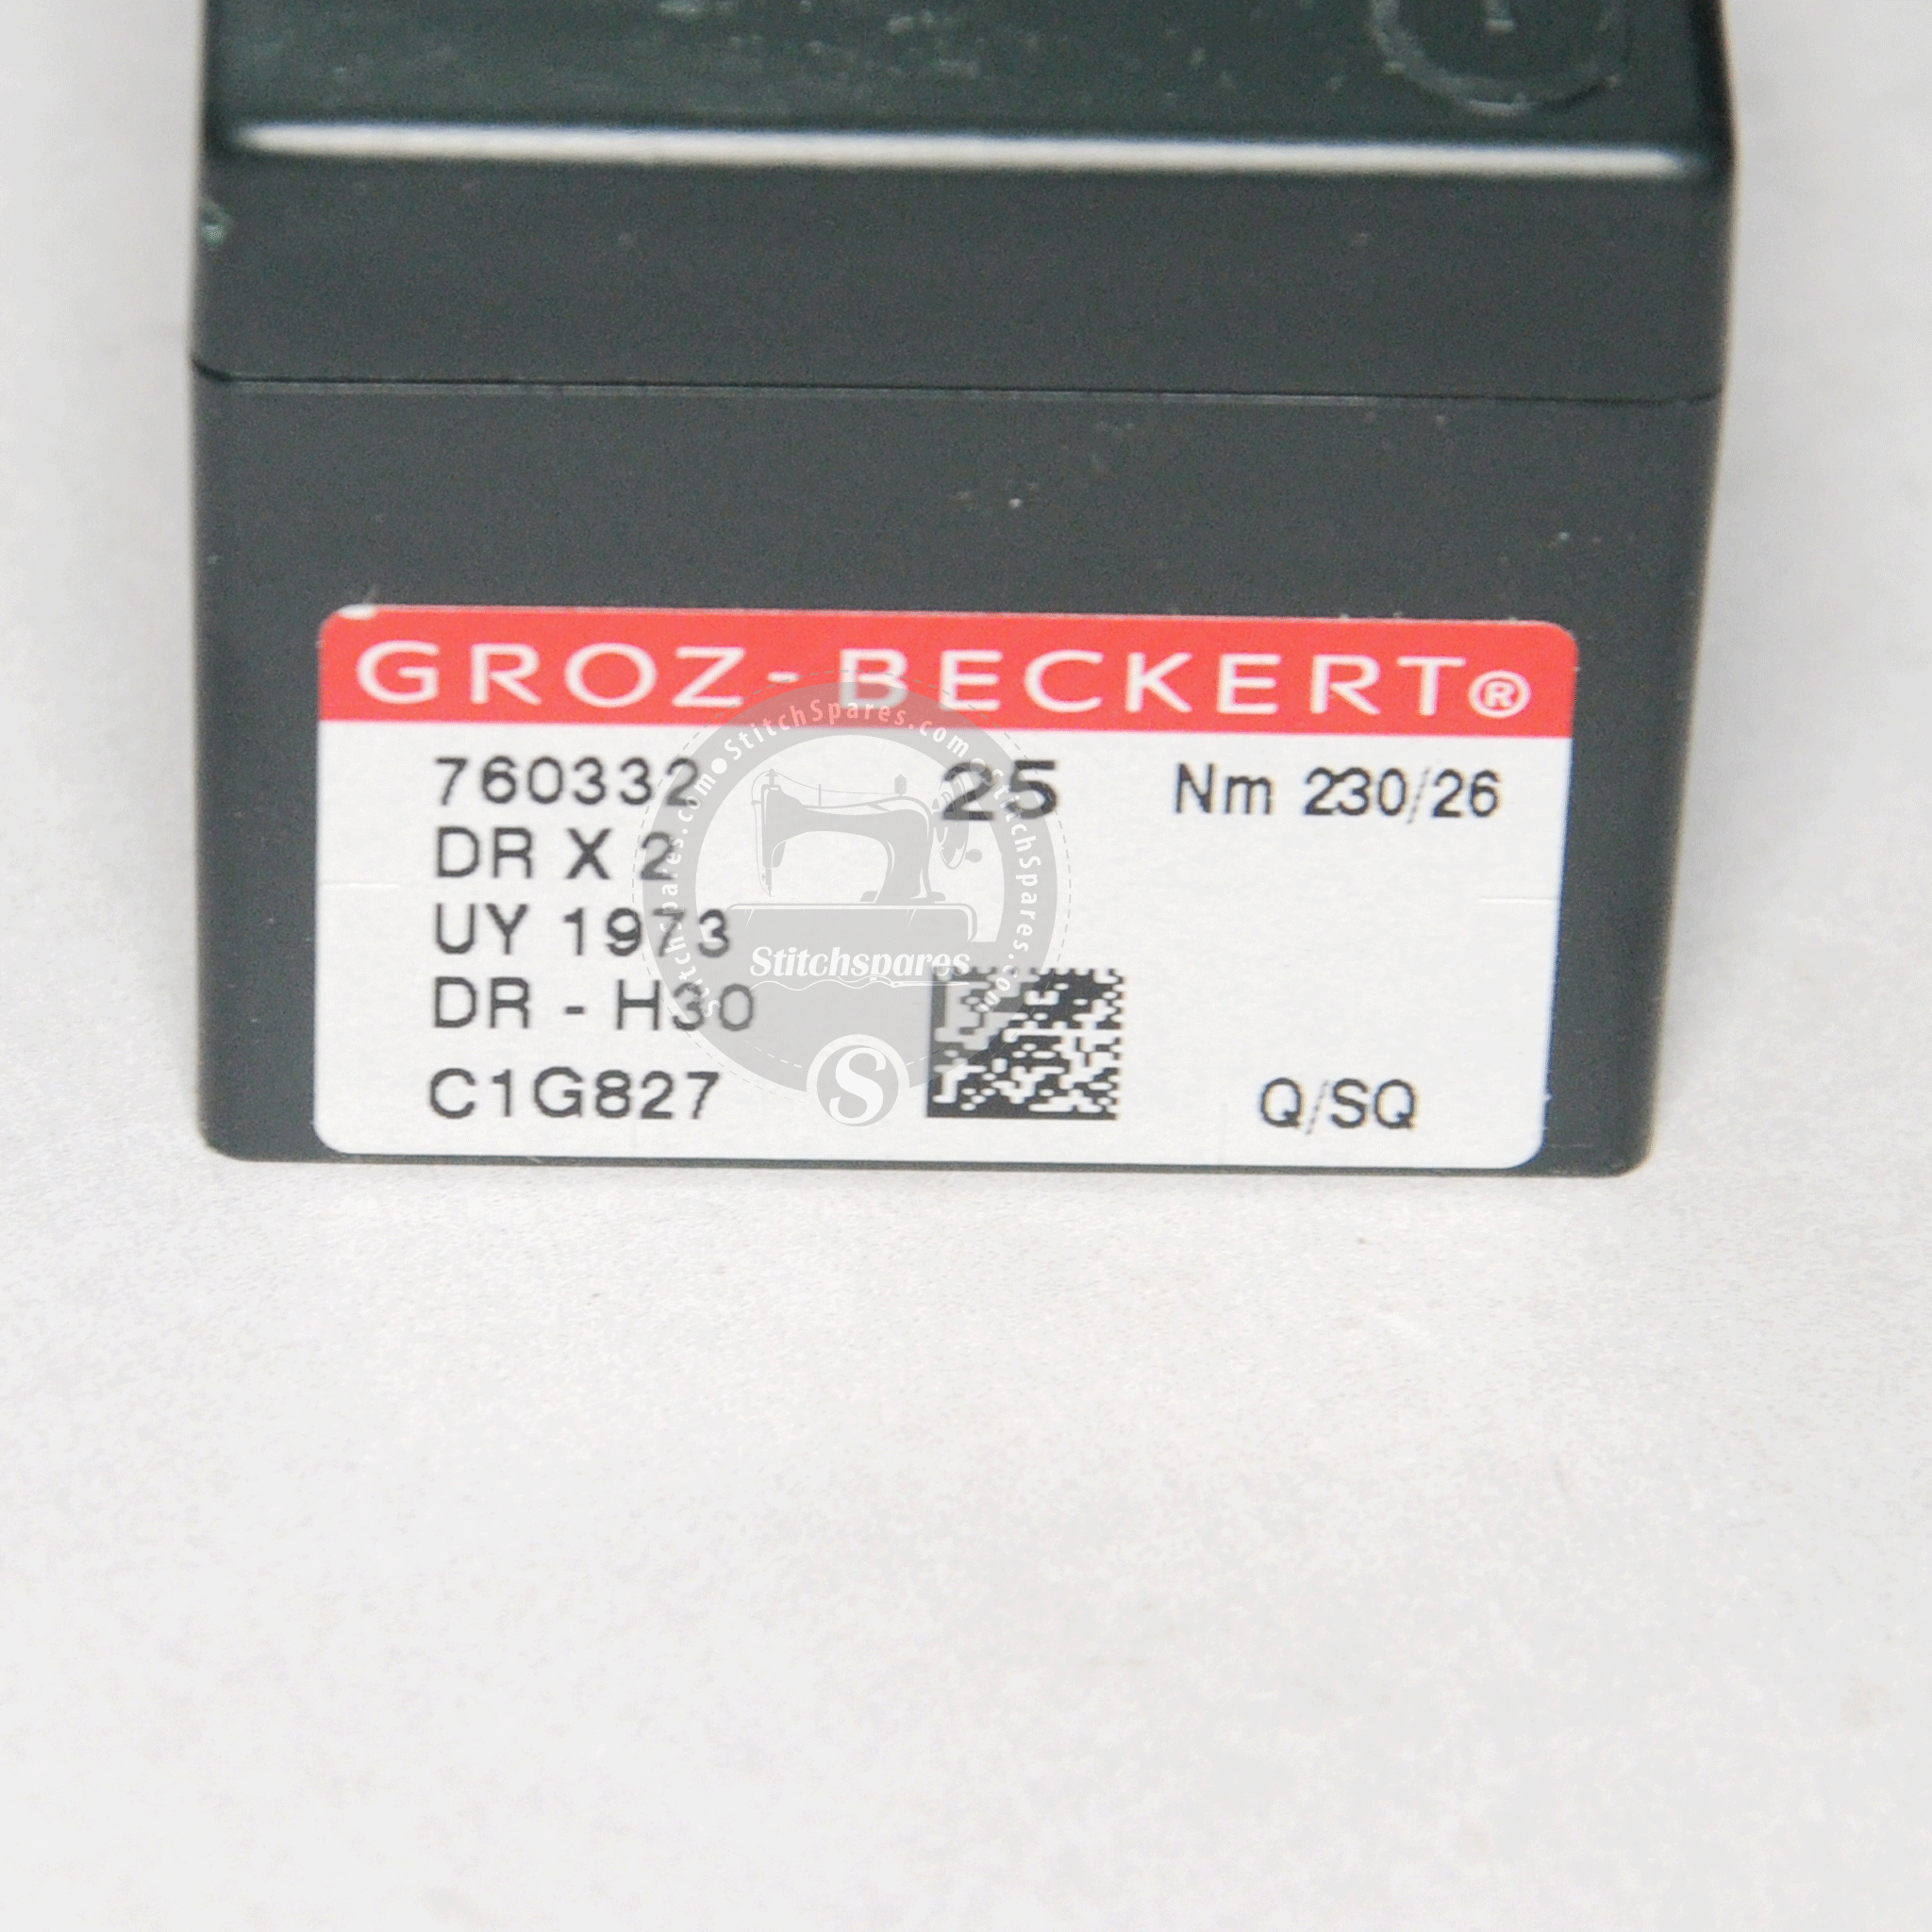 DRX2 124X2 UY 1973 23026 Groz Beckert सिलाई मशीन सुई